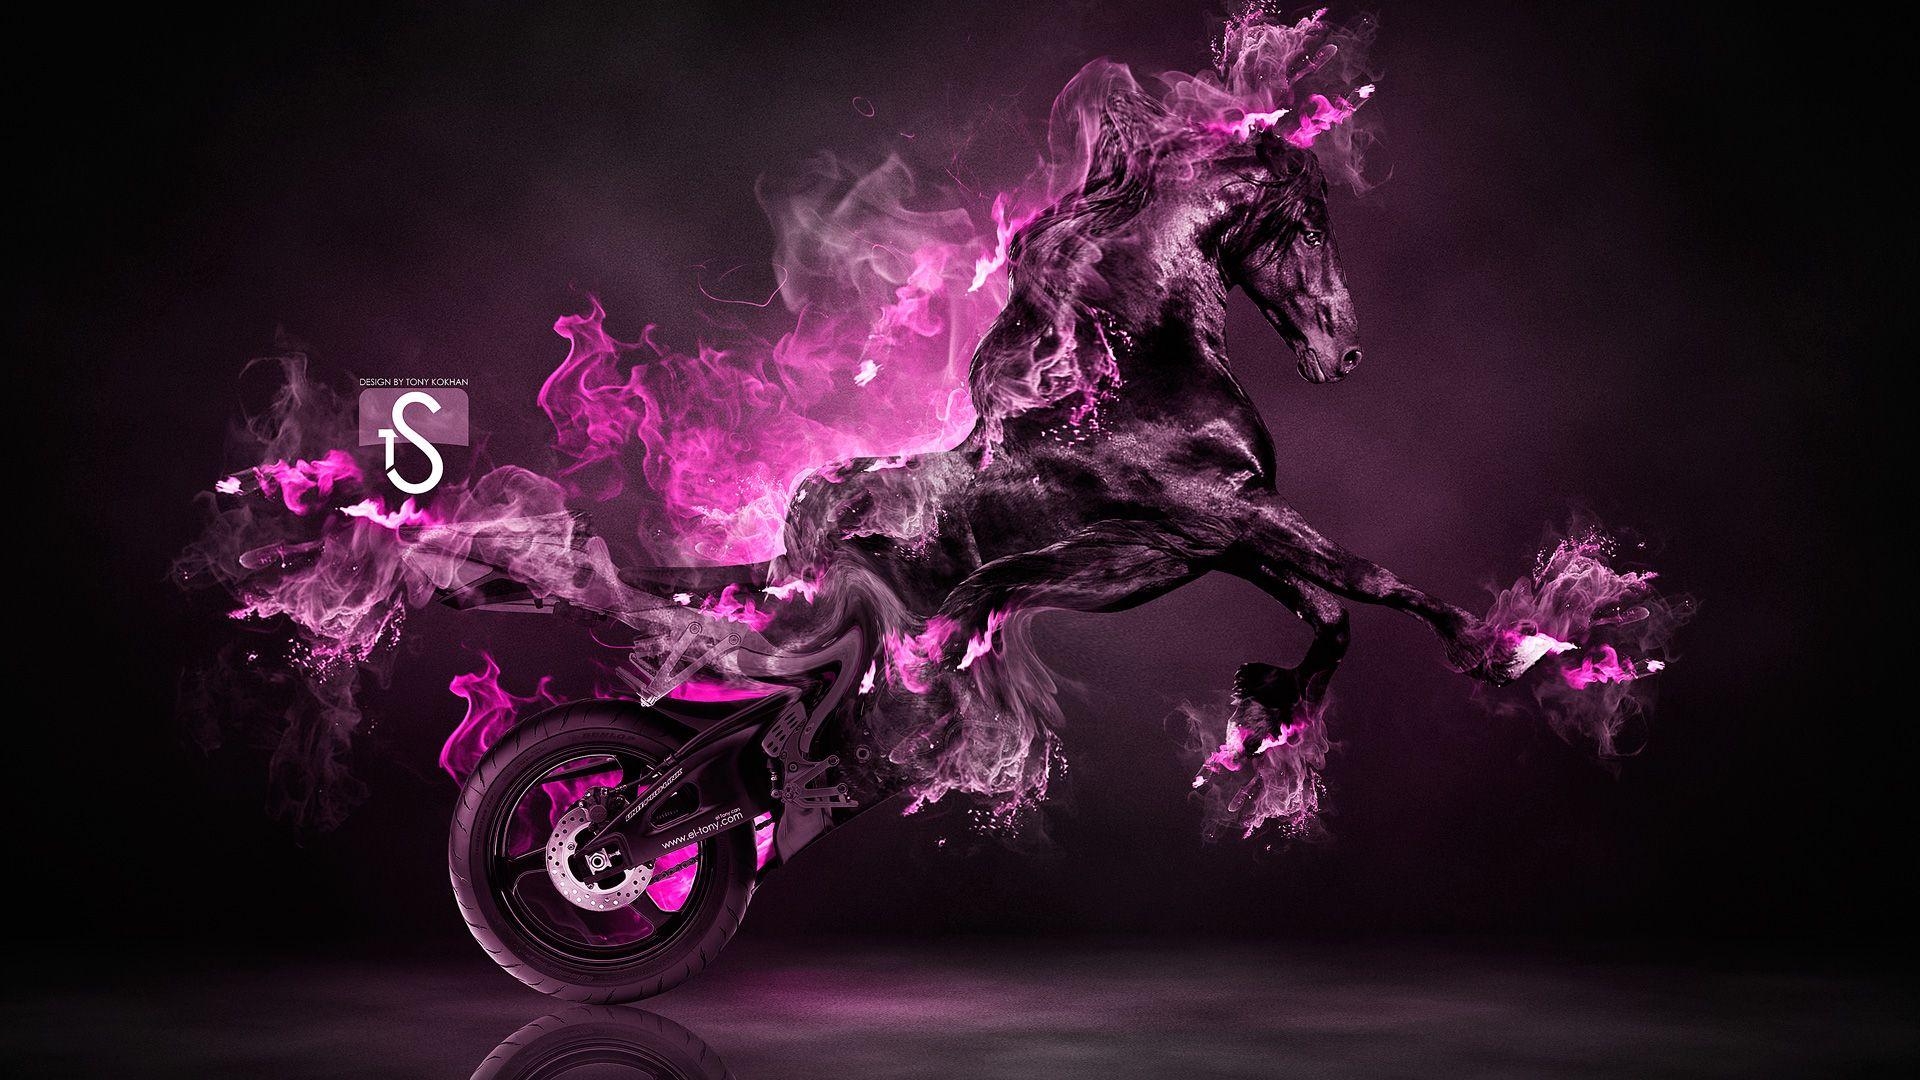 Pink HD Wallpaper, High Definition, High Quality, Widescreen